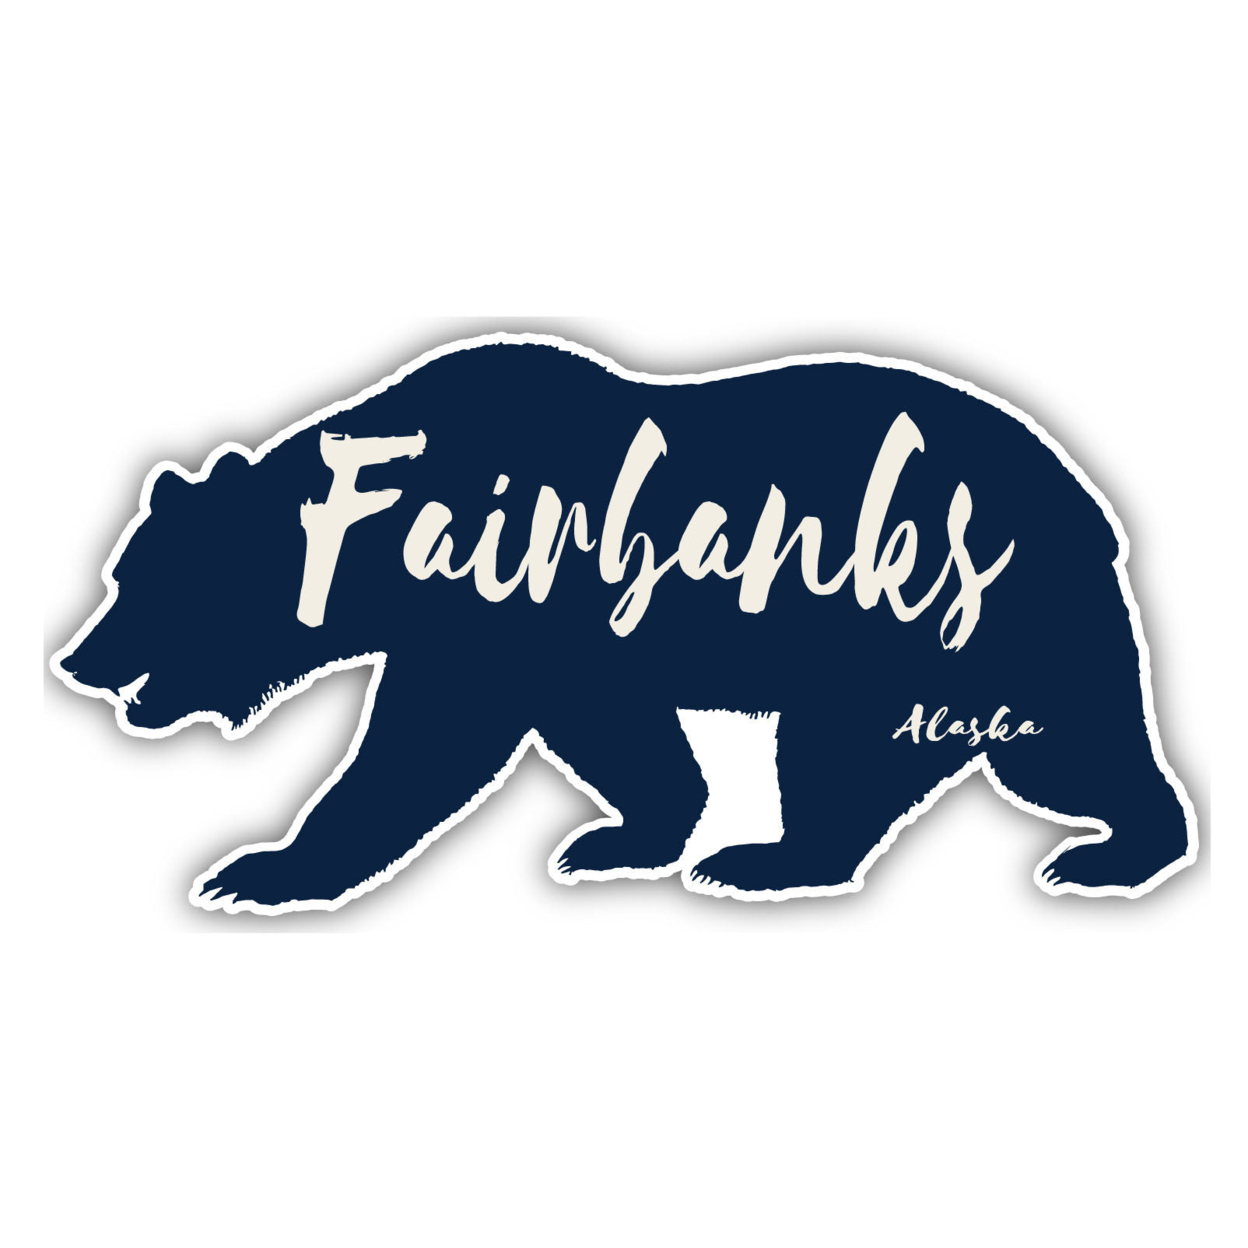 Fairbanks Alaska Souvenir Decorative Stickers (Choose Theme And Size) - 4-Pack, 4-Inch, Bear